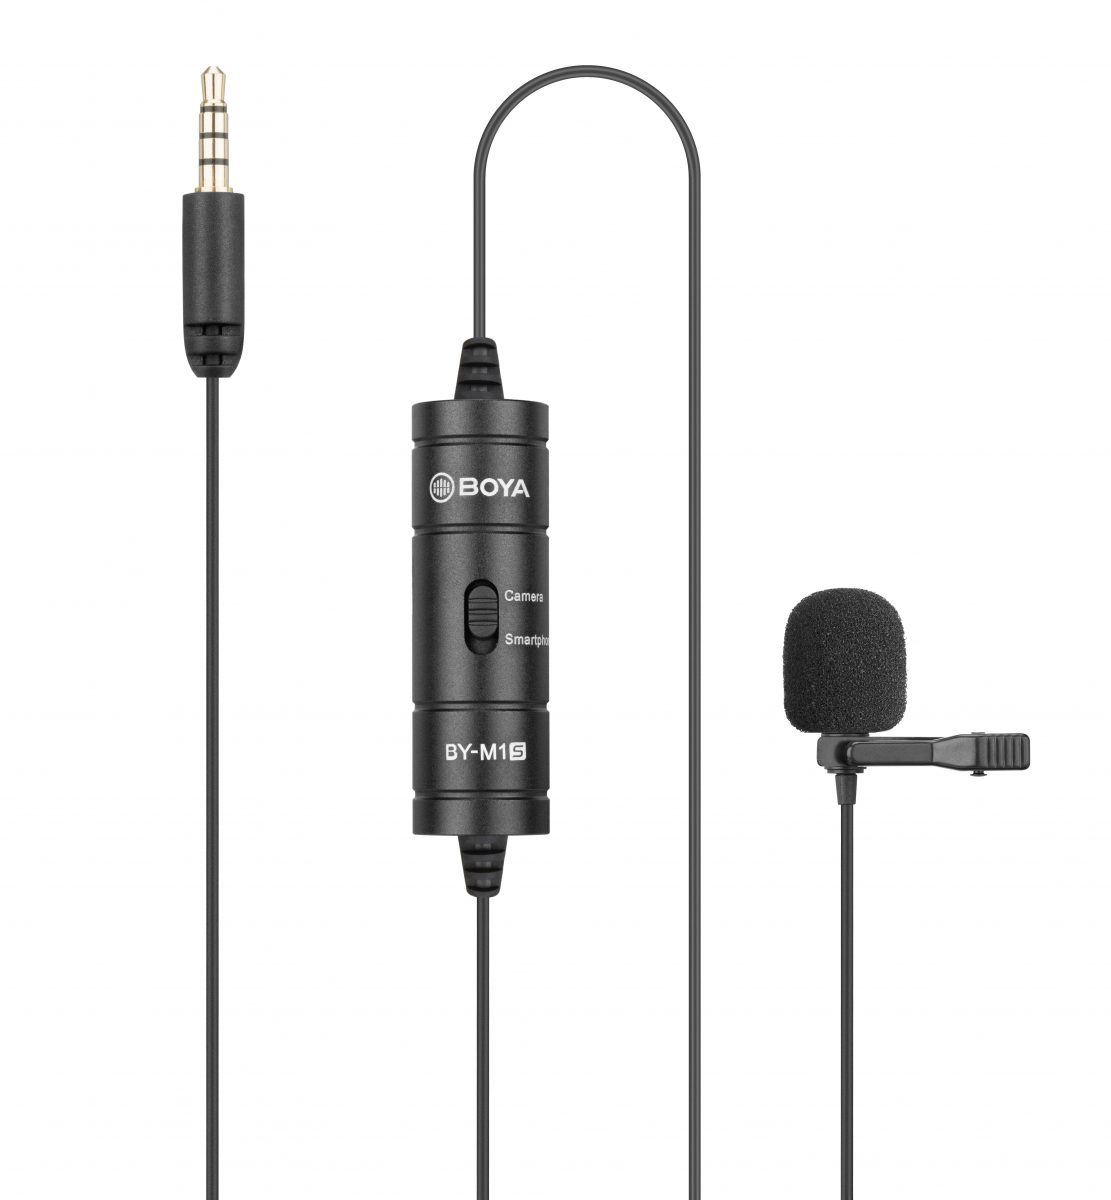 BOYA BY-M1S (M1 Smart) wired mic Universal Lavalier Microphone 3.5mm for phone, laptop, camera - BOYA 2.35.70.02.013